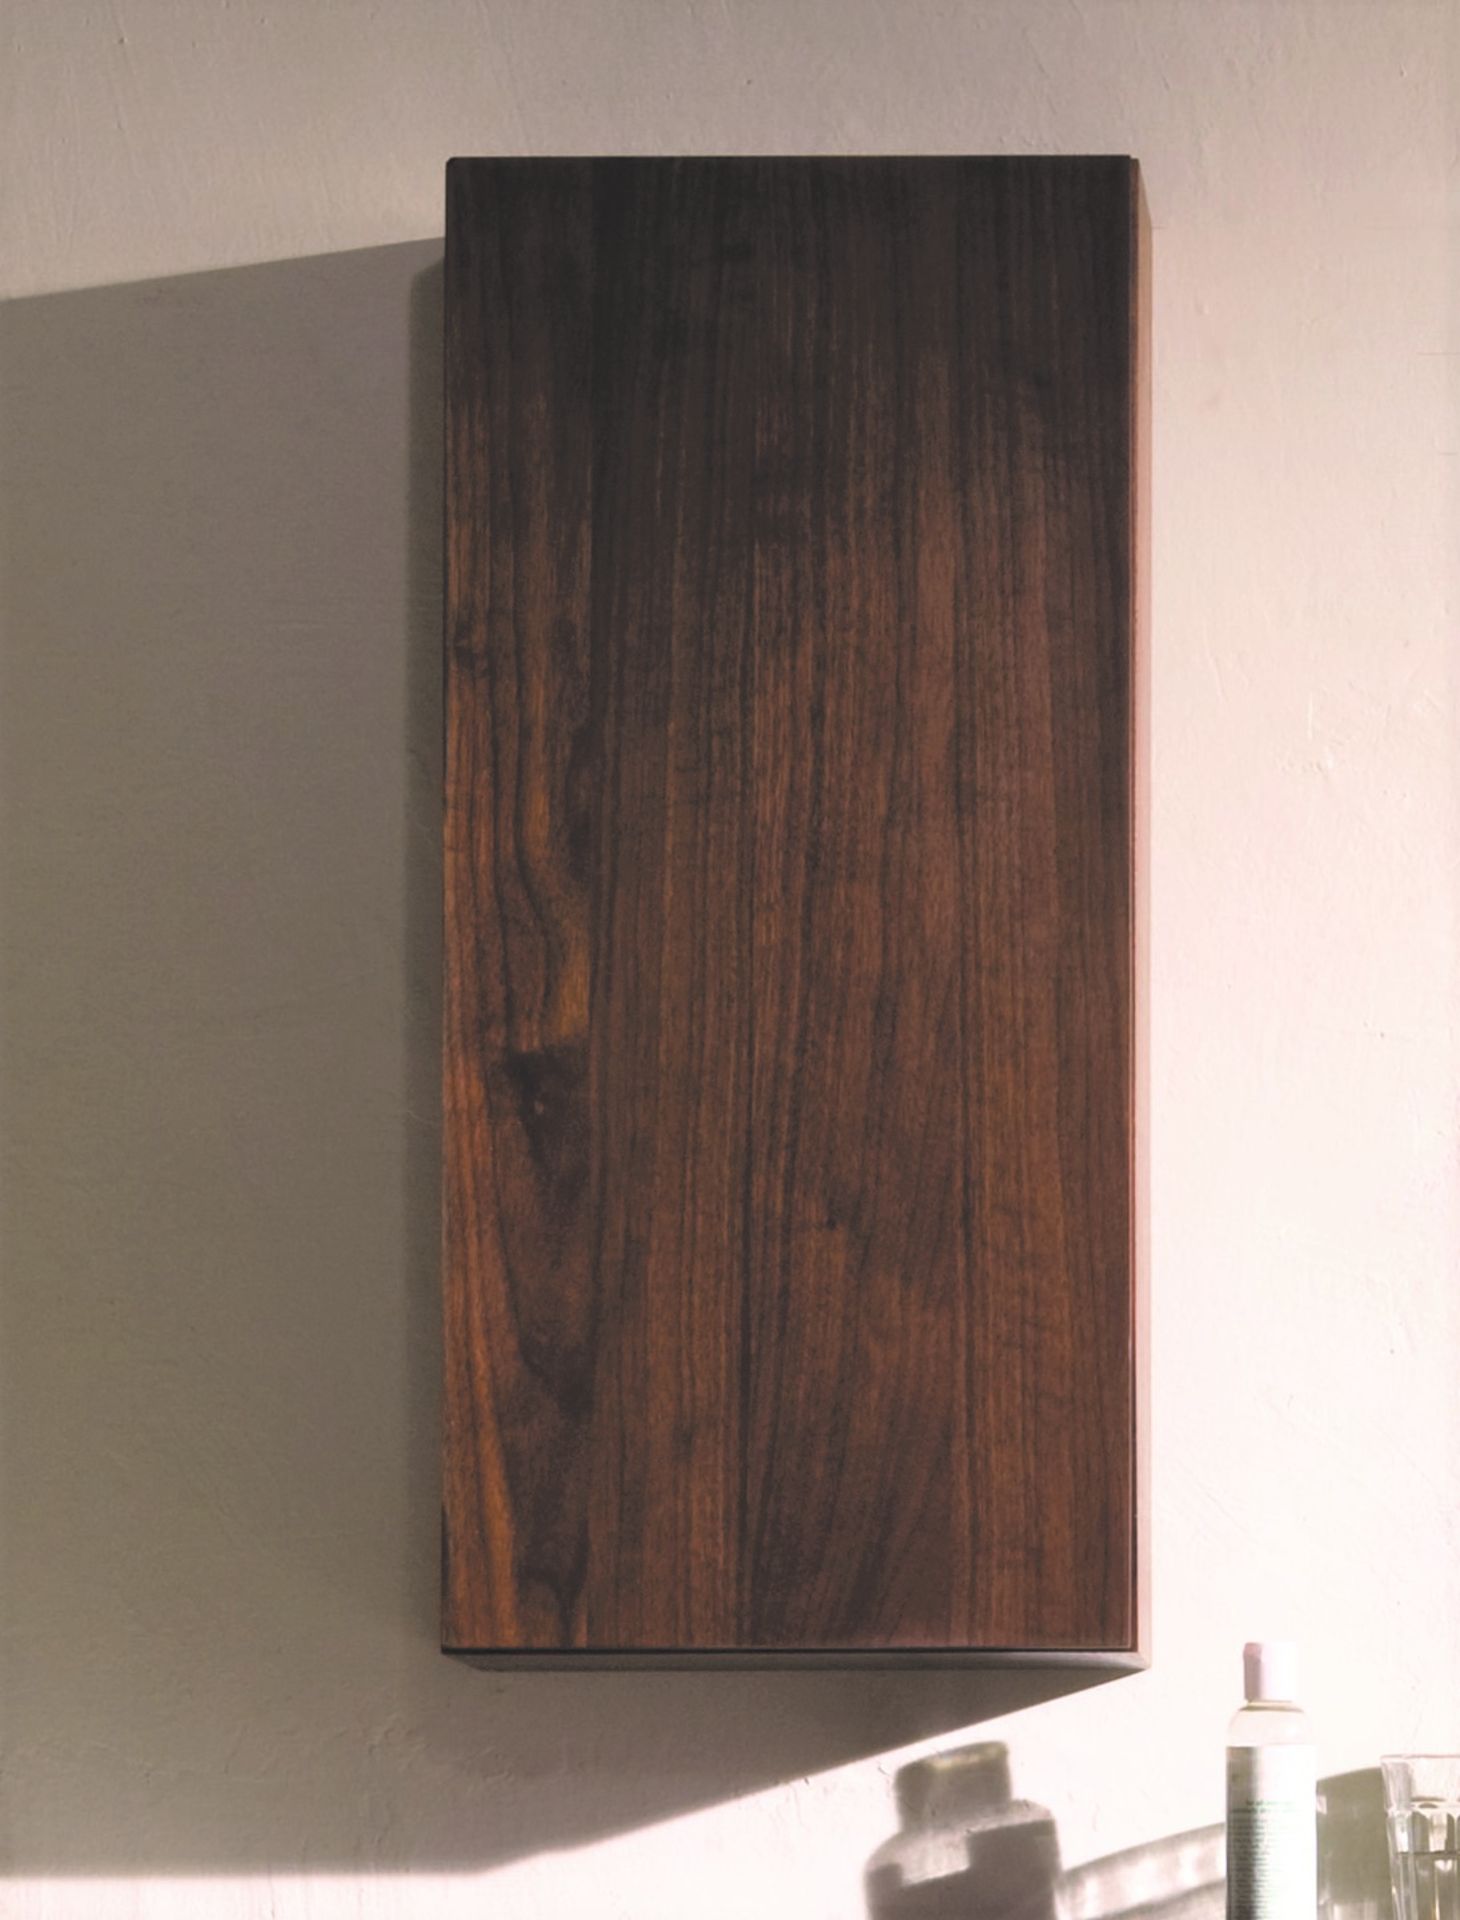 1 x Stonearth 300mm Wall Mounted Bathroom Storage Cabinet - American Solid Walnut - Original RRP £